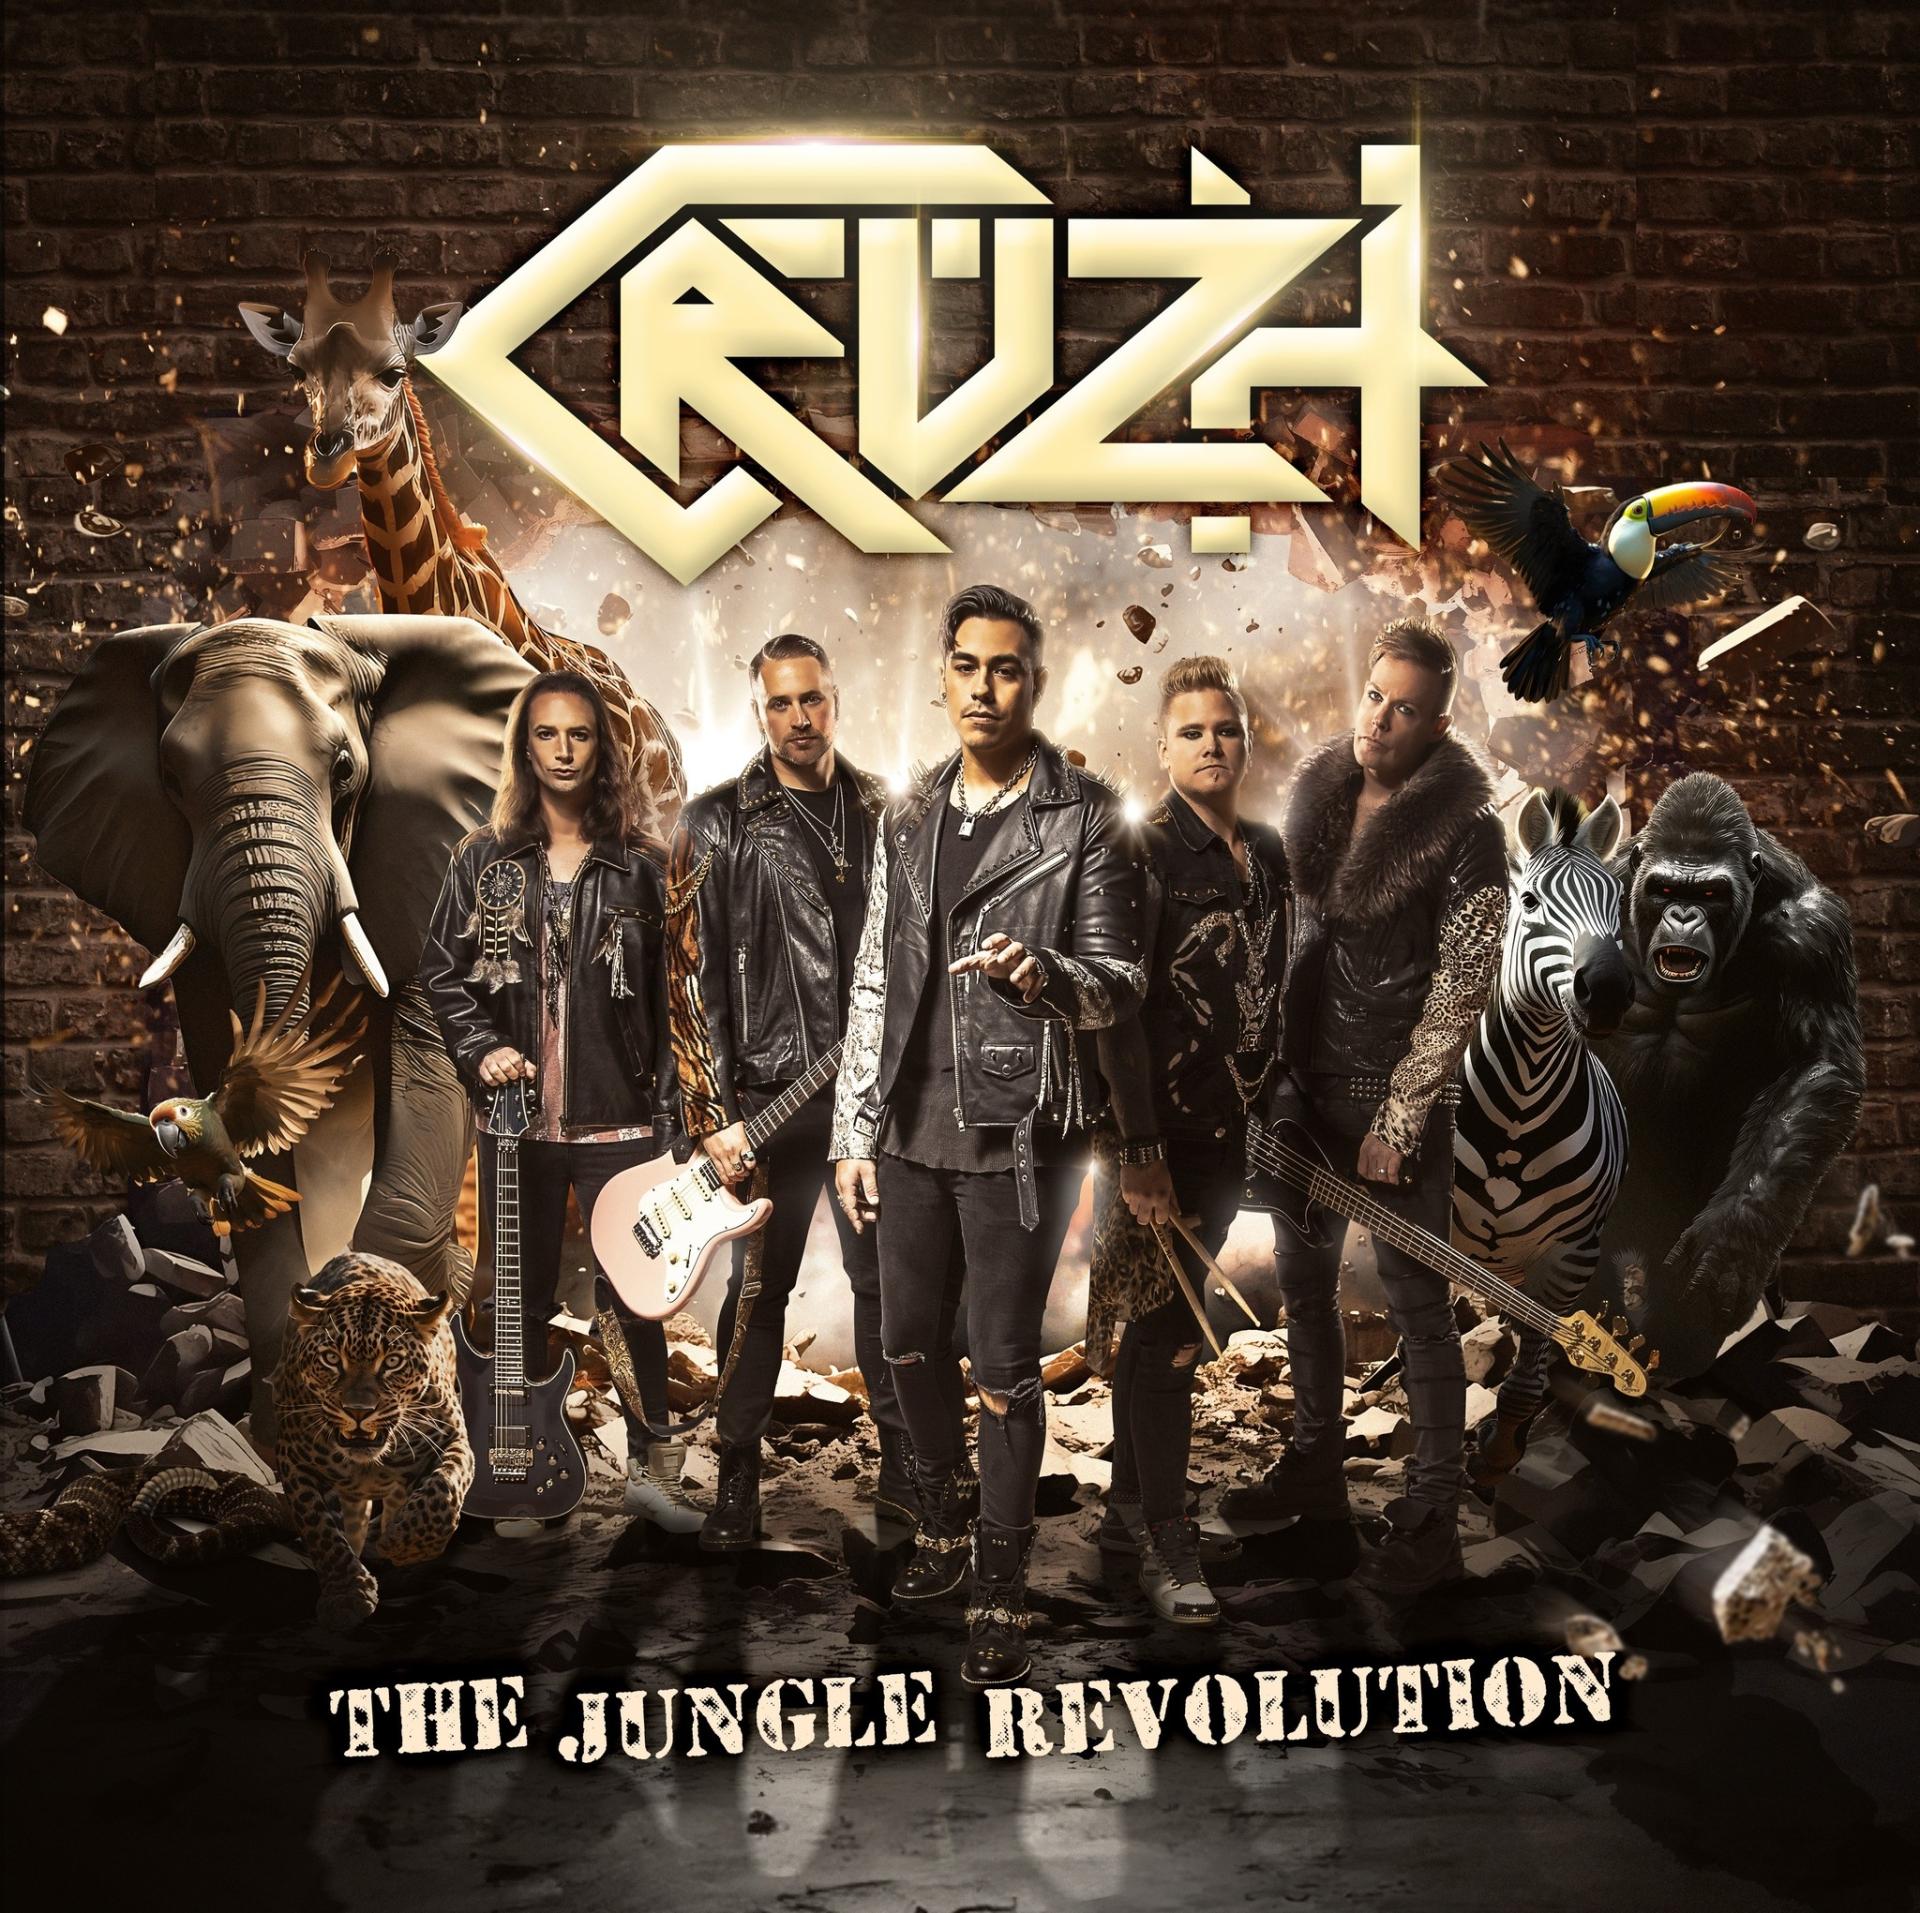 The jungle revolution artwork